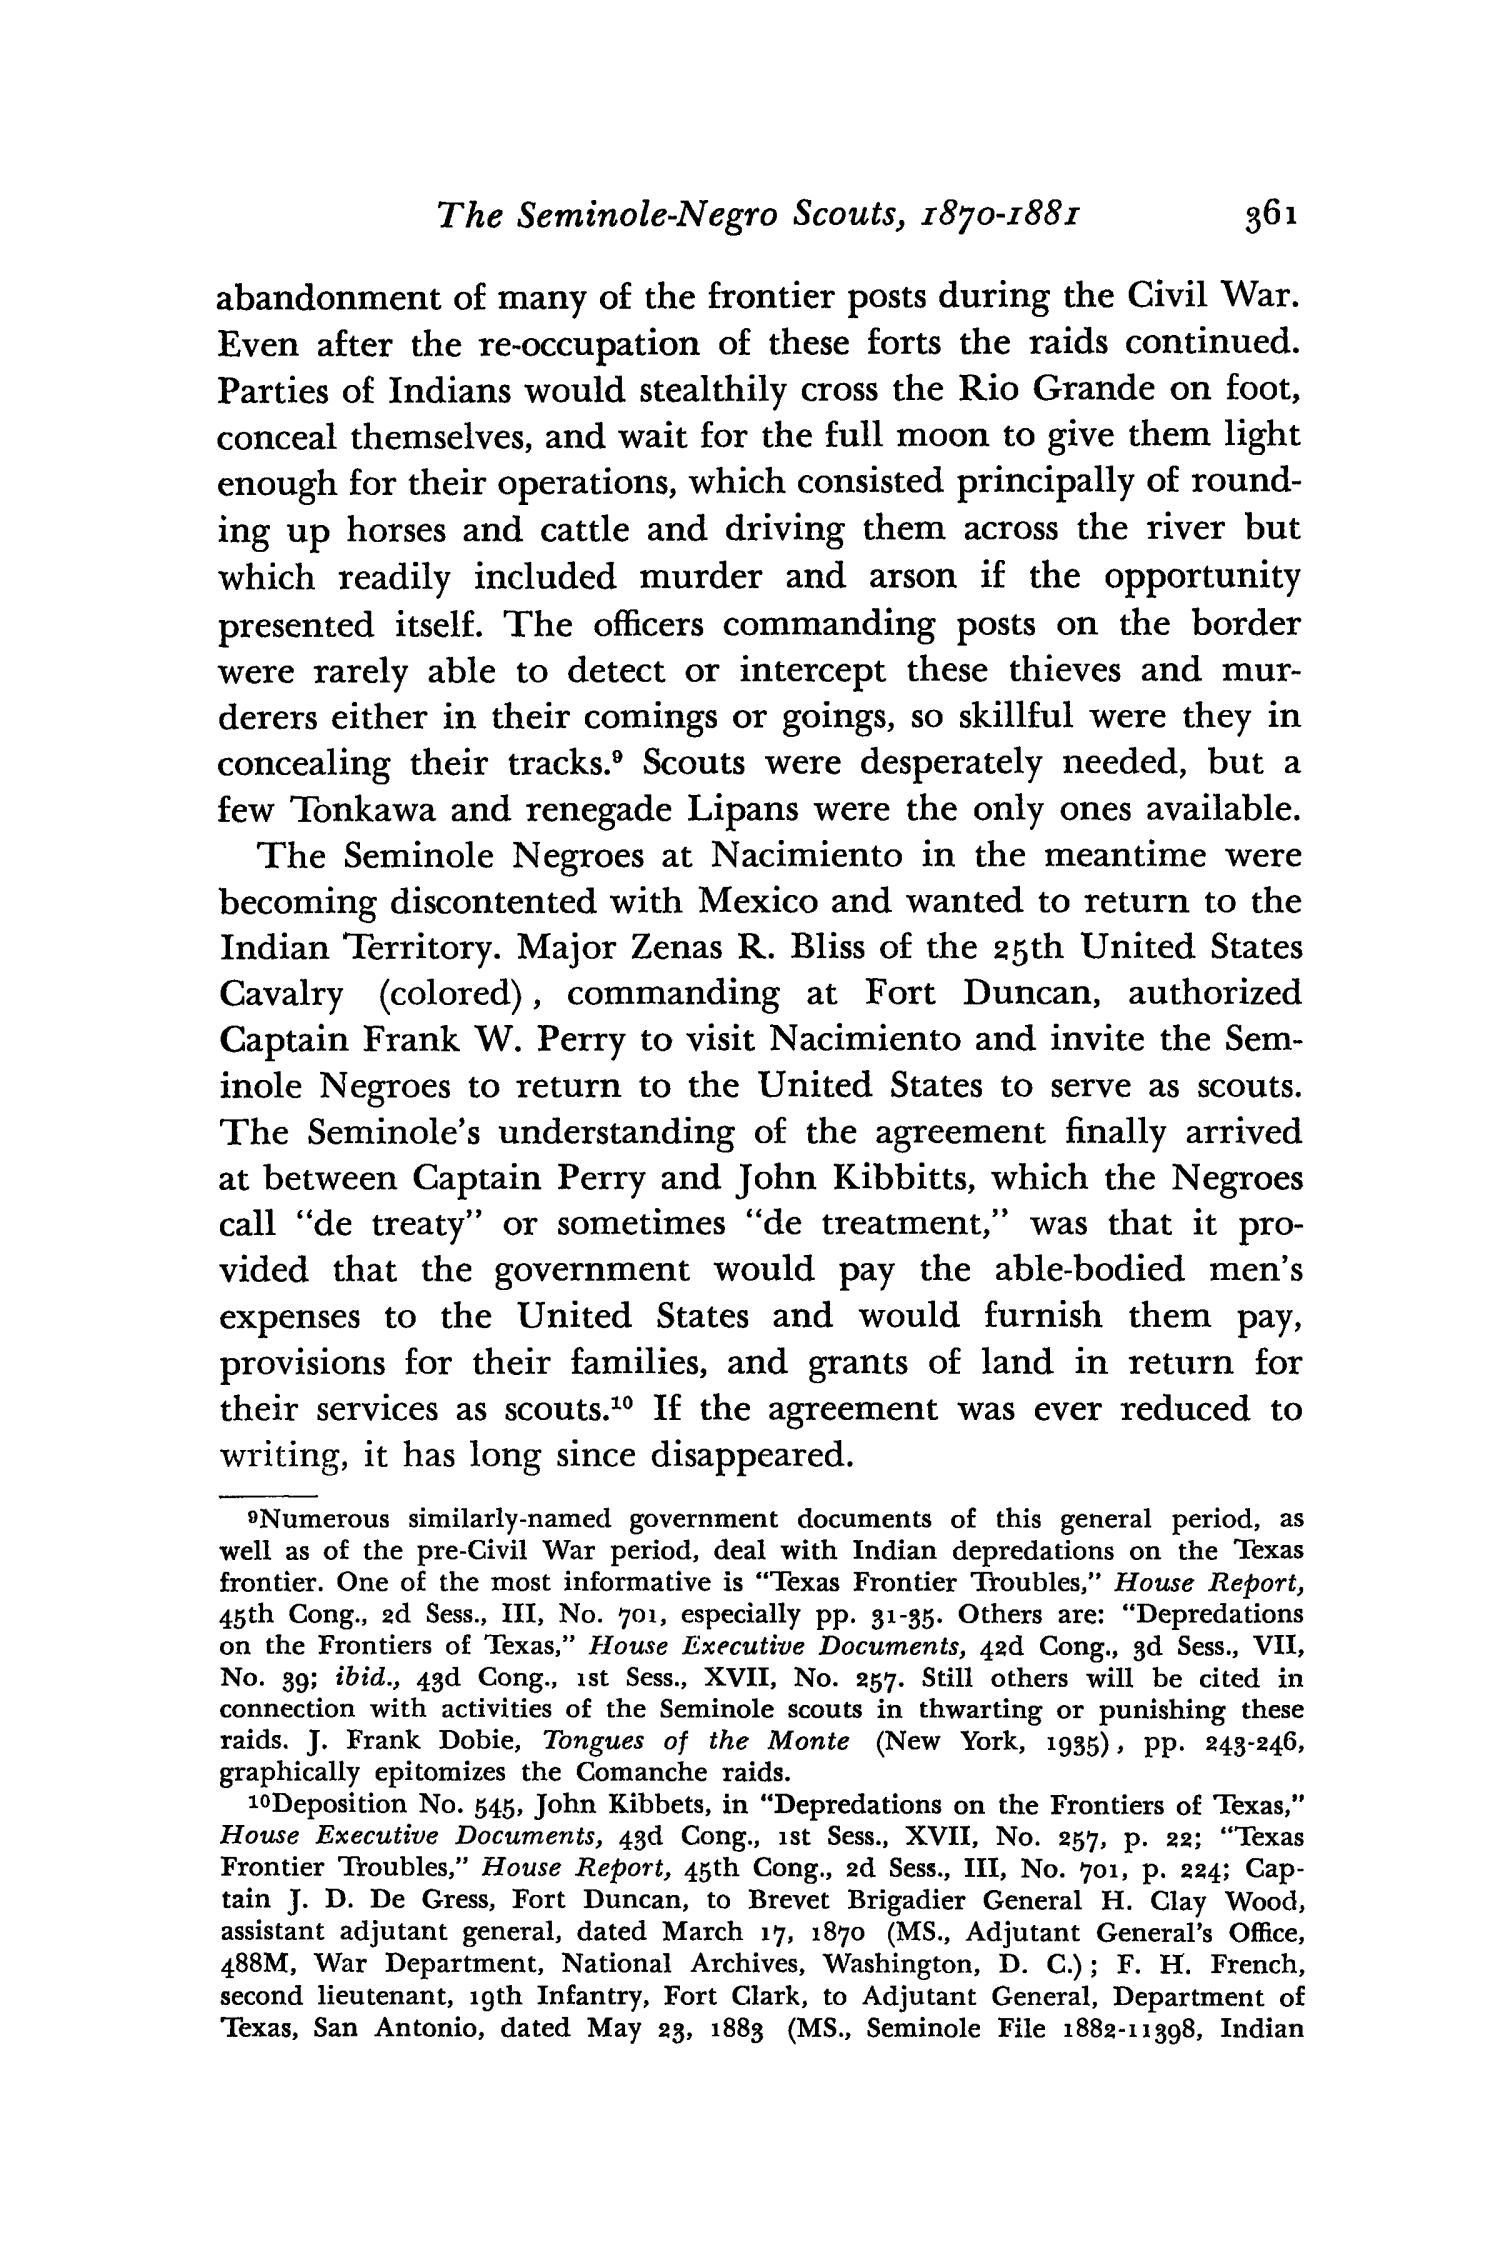 The Southwestern Historical Quarterly, Volume 55, July 1951 - April, 1952
                                                
                                                    361
                                                